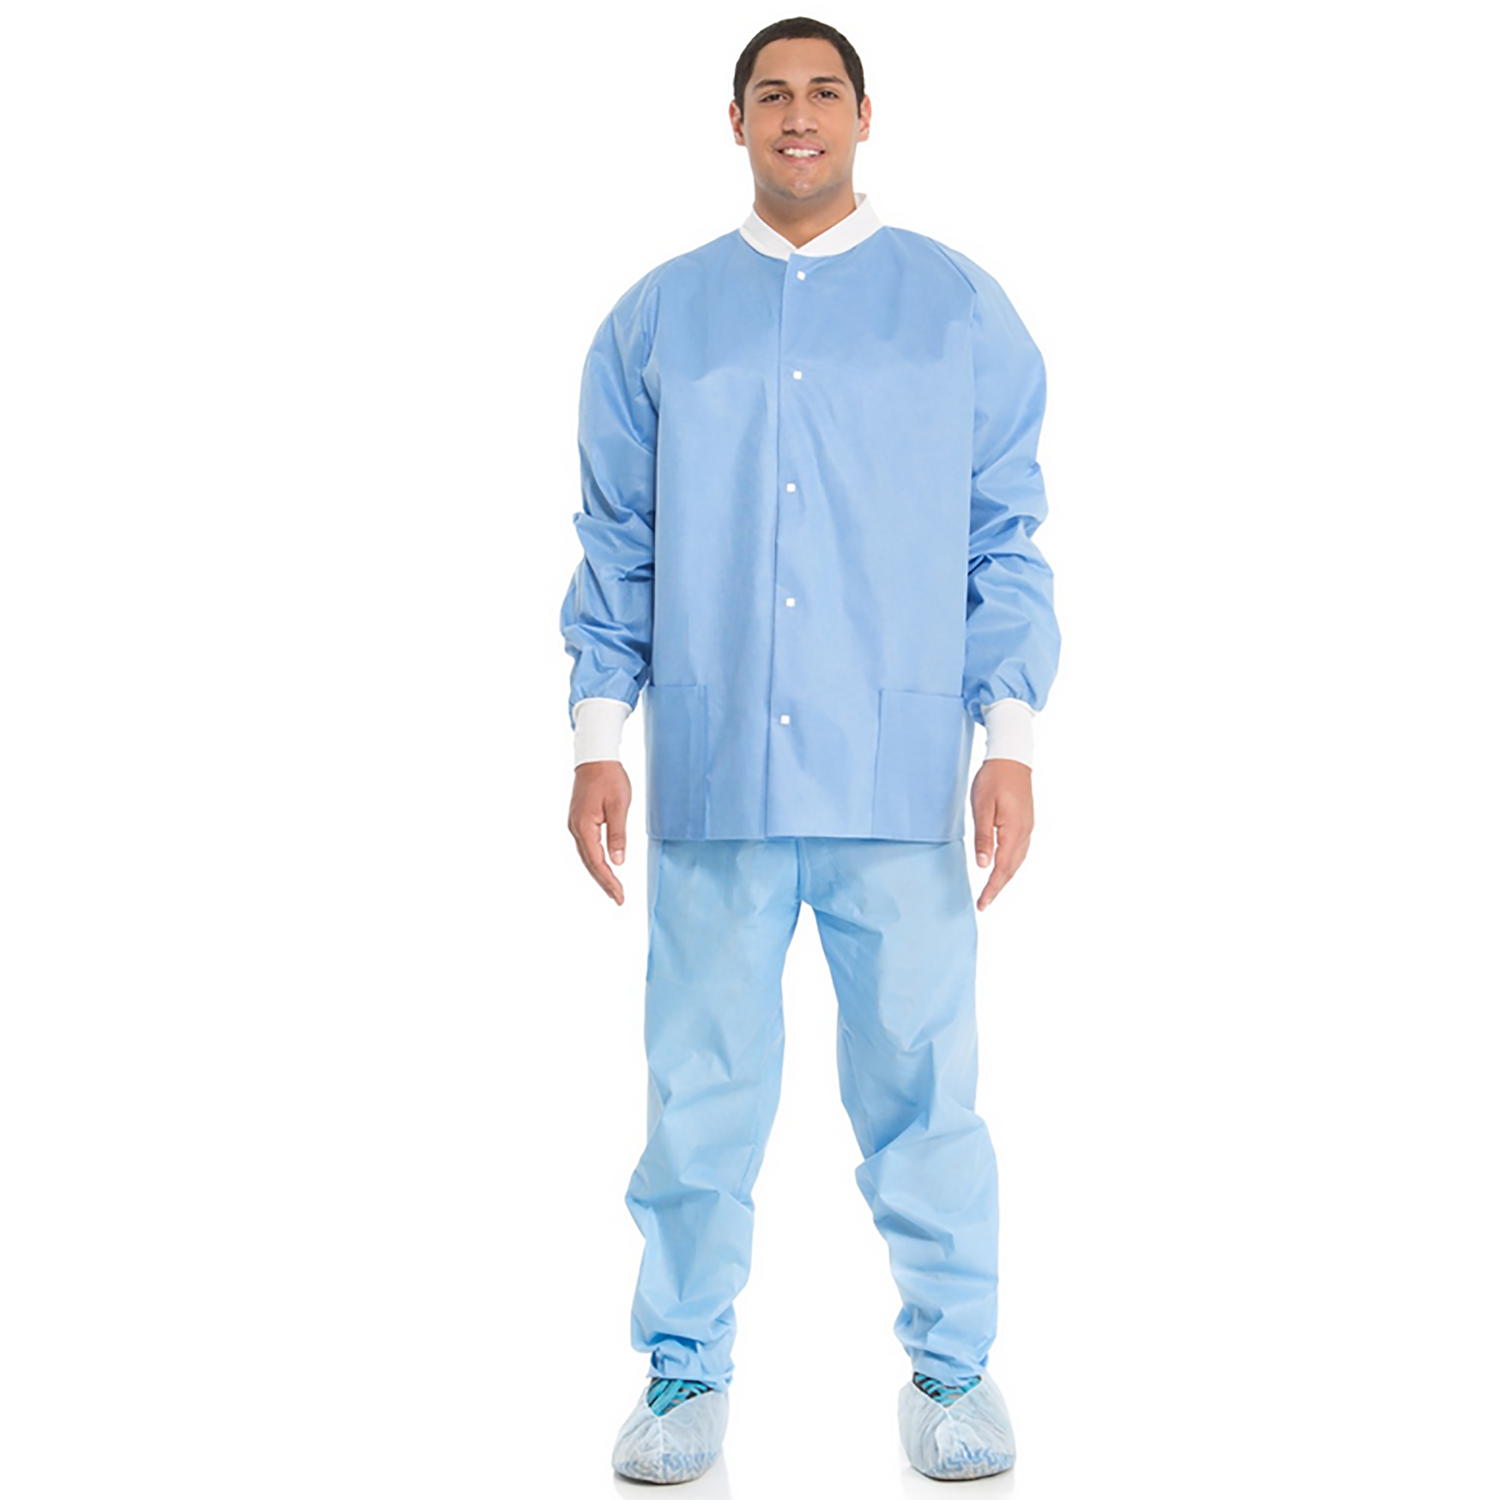 Halyard Professional Jacket | Blue | Medium | Pack of 24